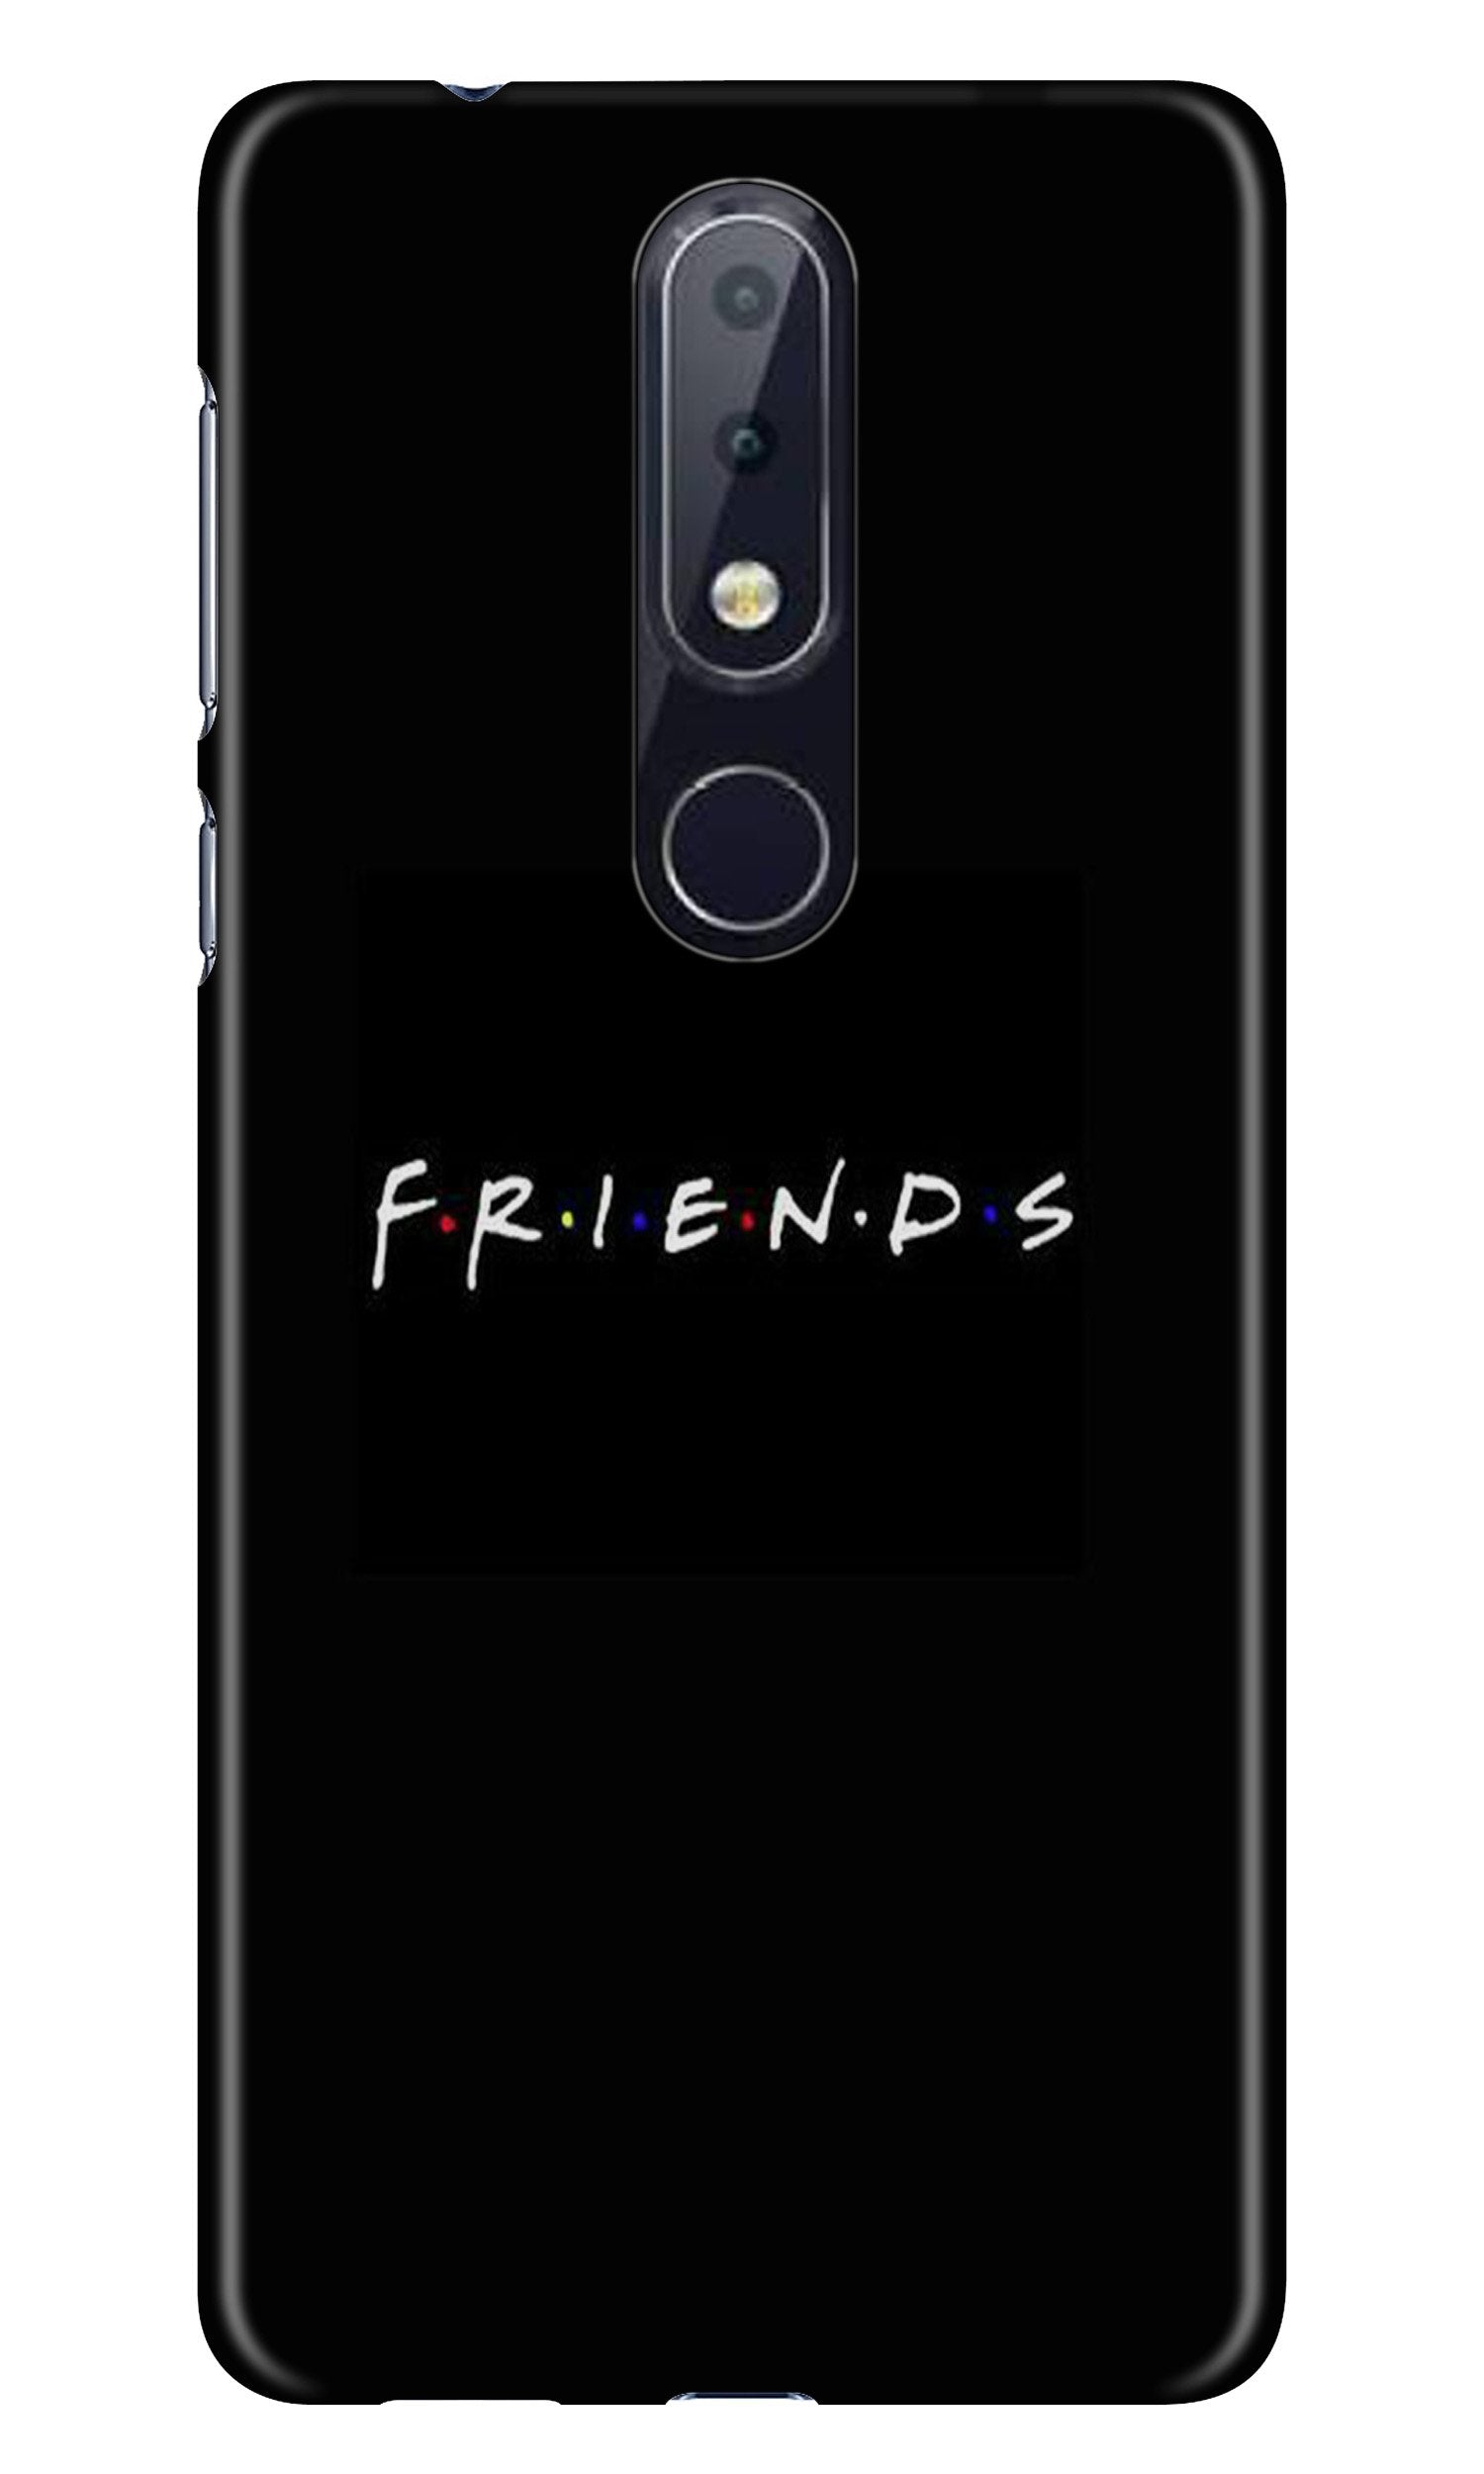 Friends Case for Nokia 4.2  (Design - 143)